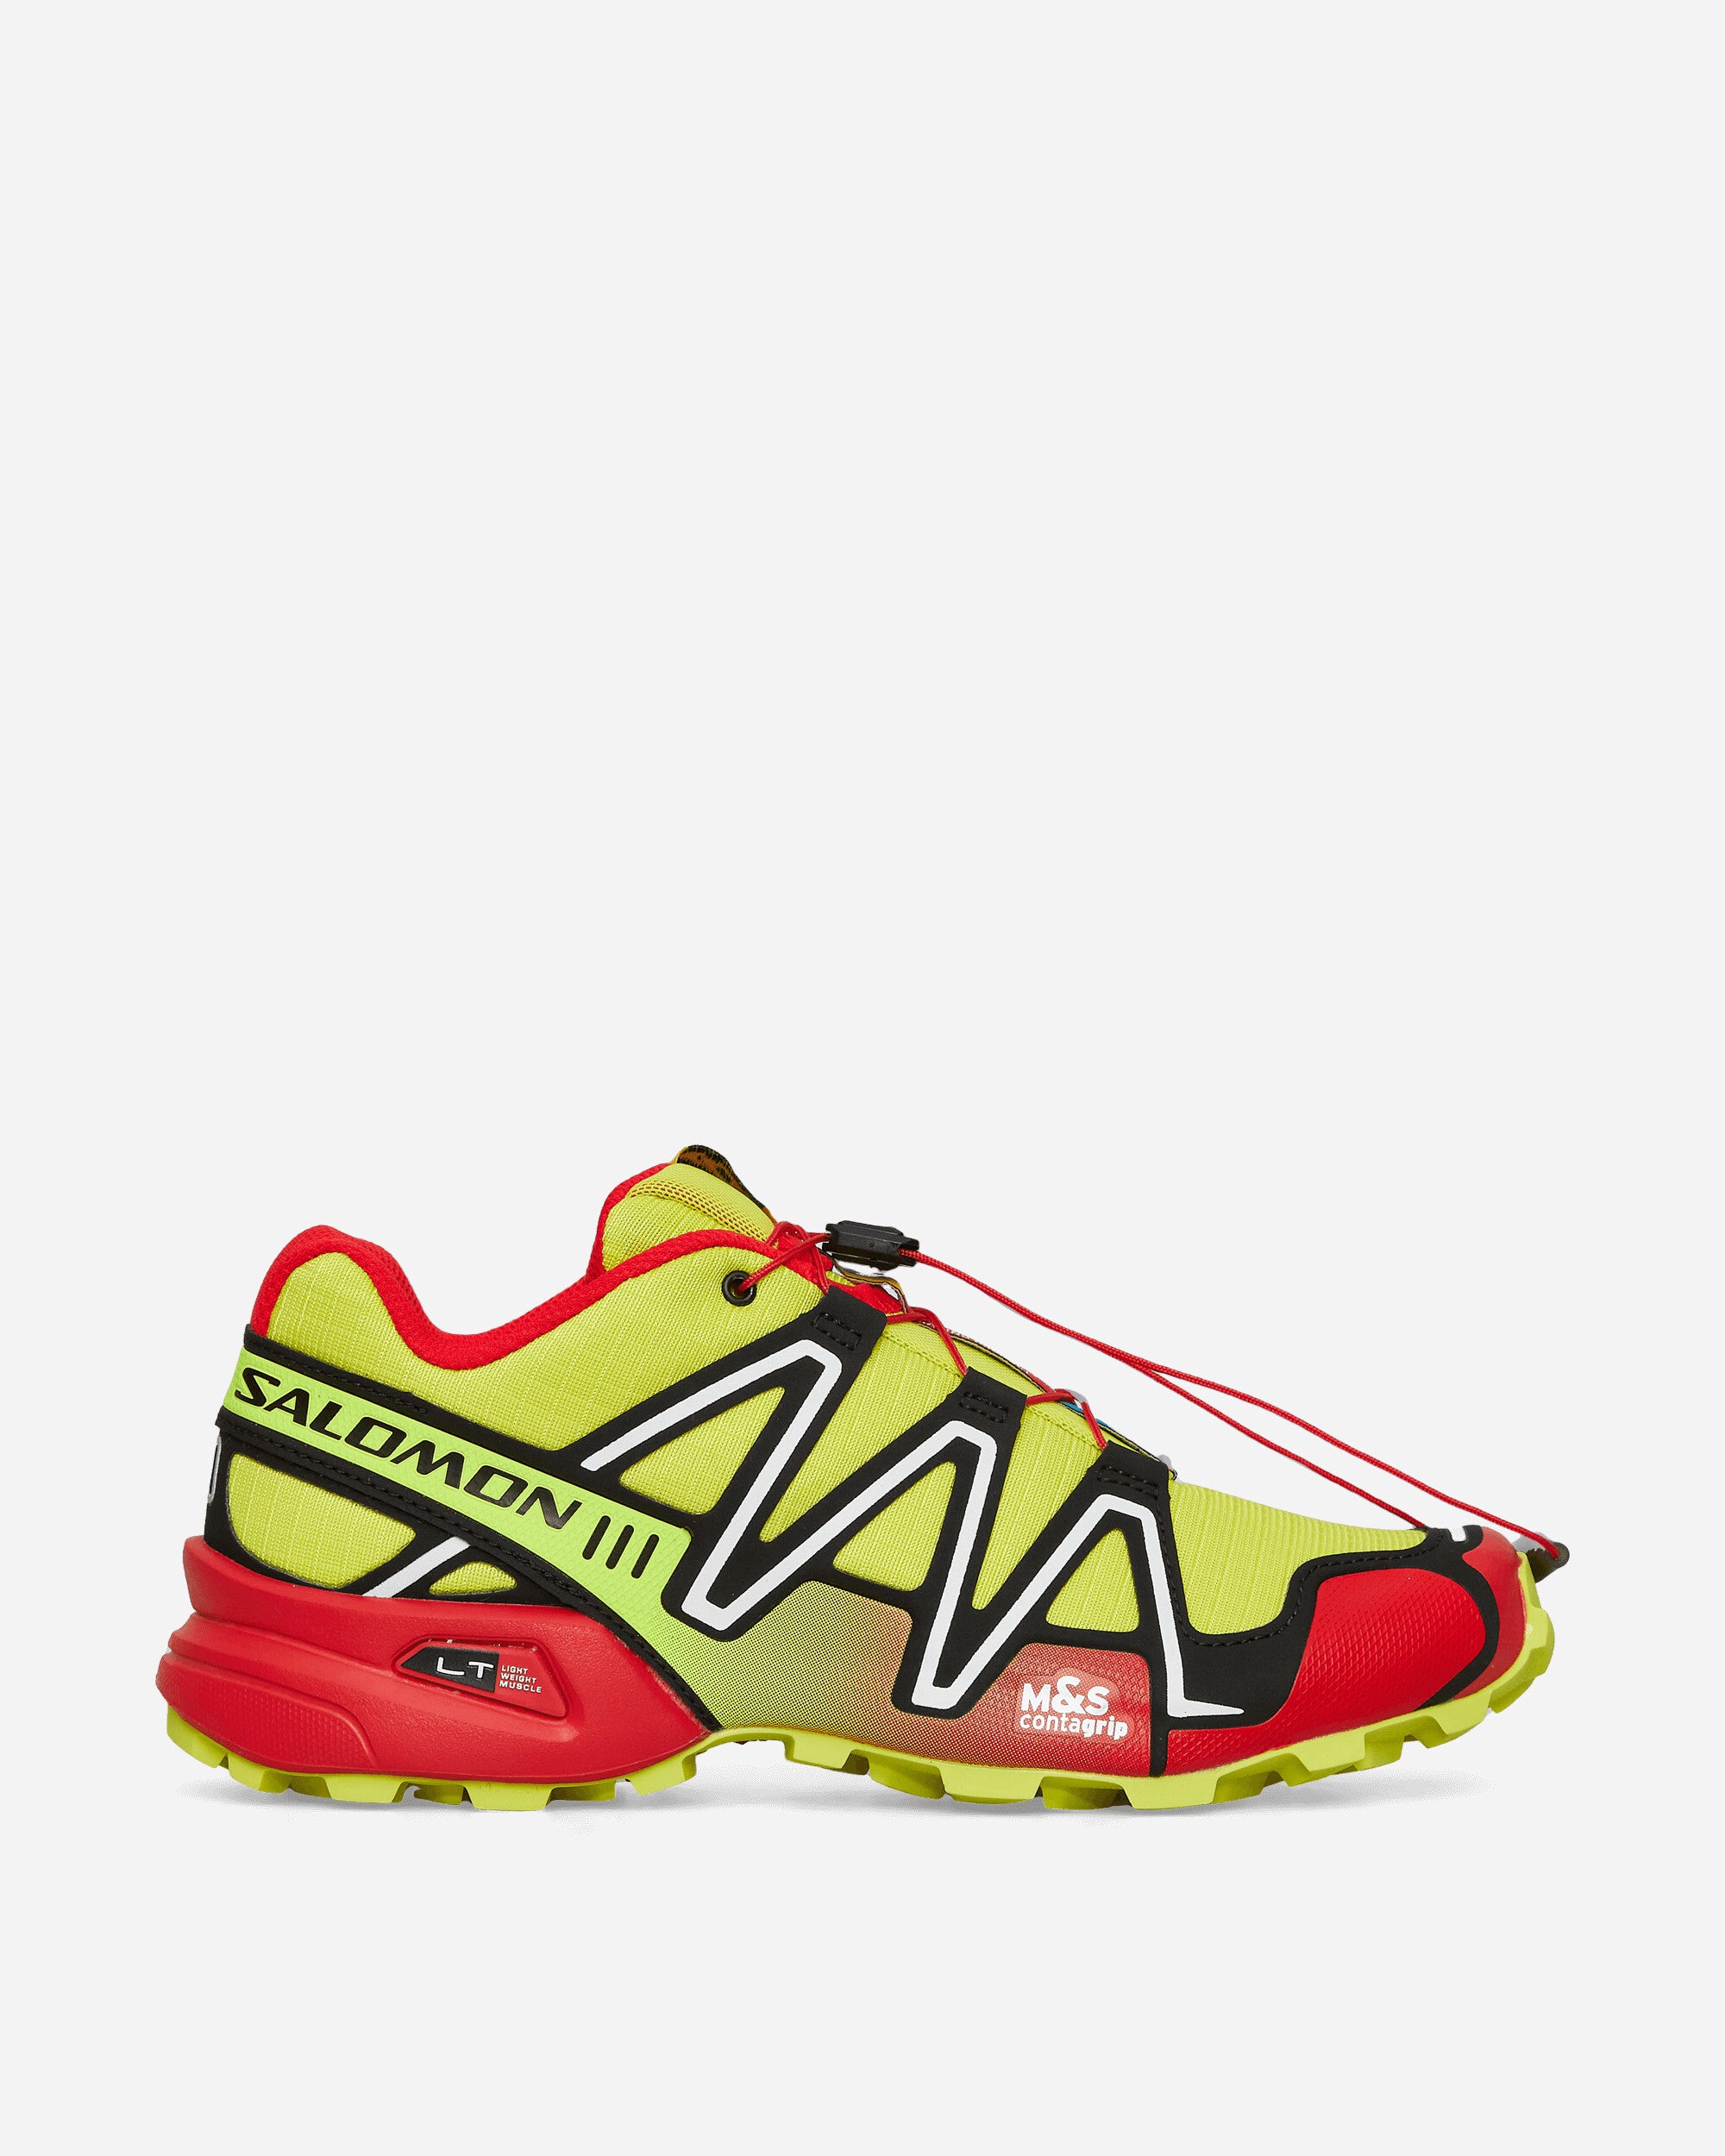 Salomon Speedcross 3 Sulphur Spring/High Risk Red Sneakers Low L47493600